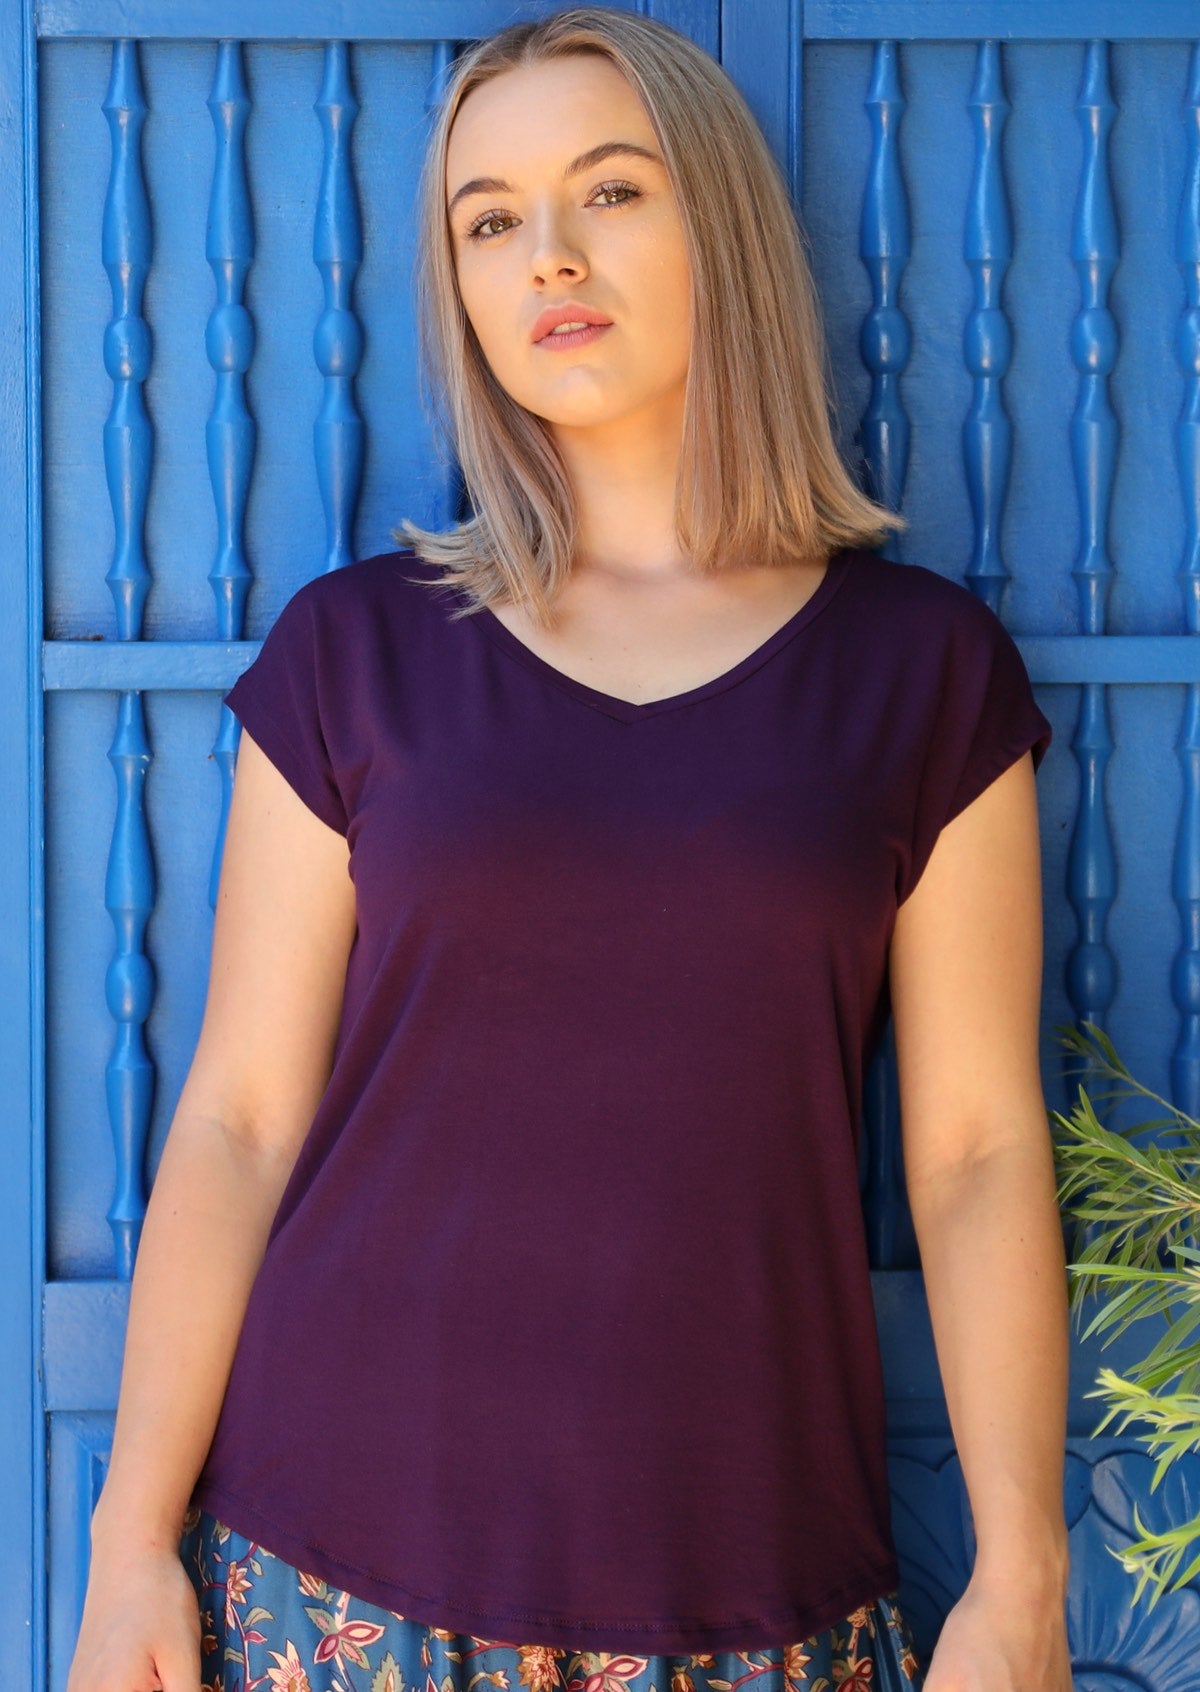 Woman wearing a dark purple v-neck short cap sleeve rayon top